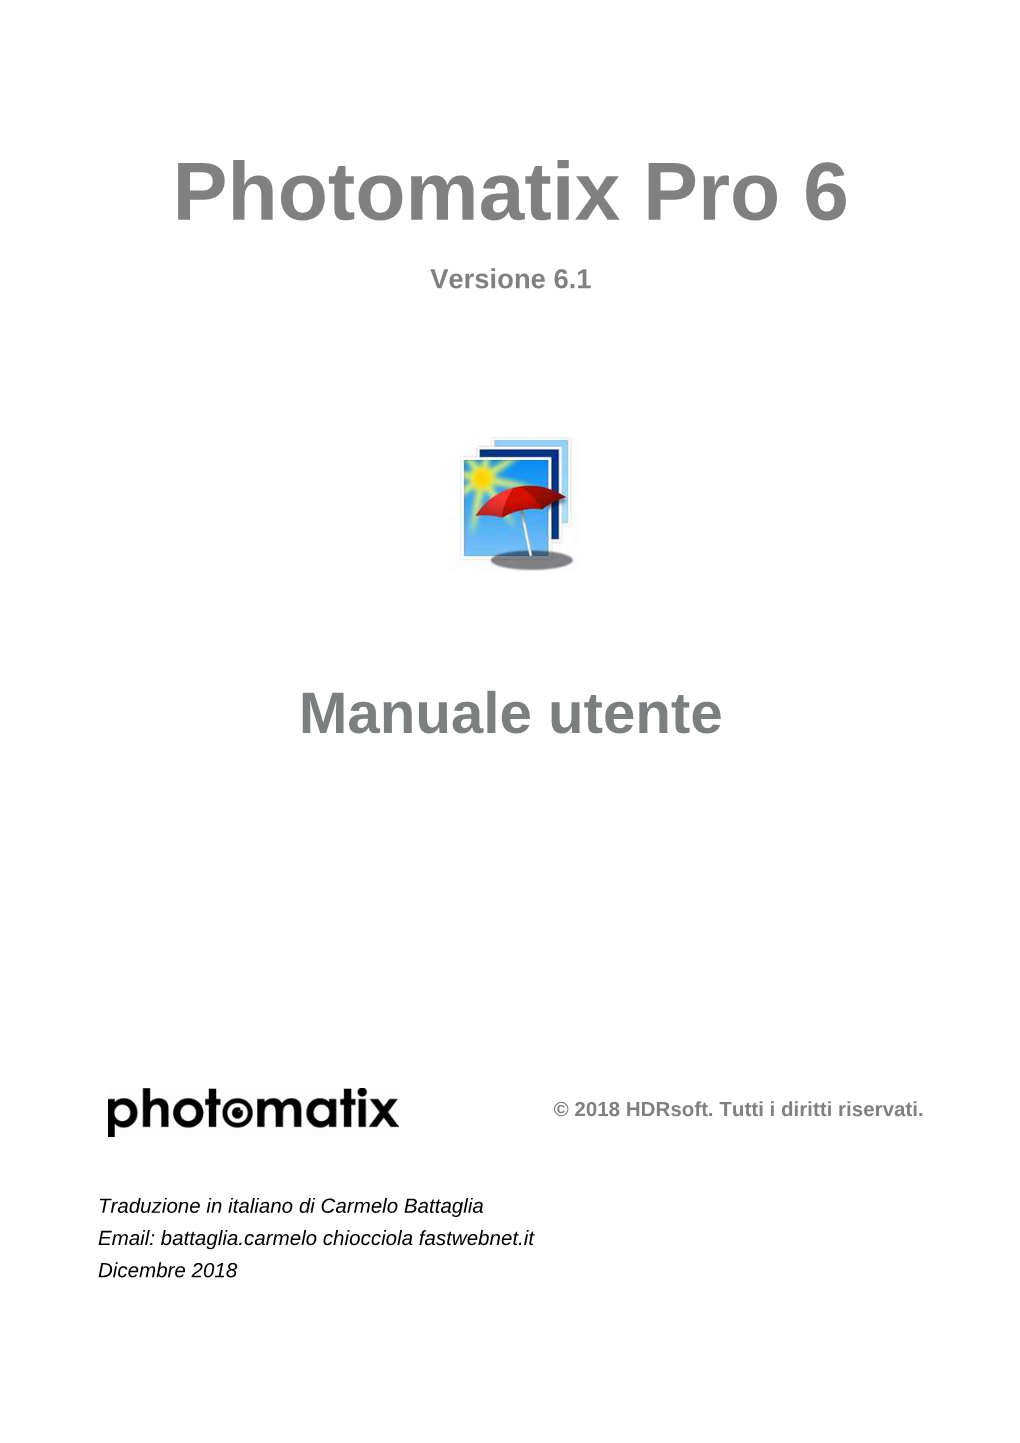 Download Photomatix Pro (Scarica Photomatix Pro) O Download Photomatix Essentials (Scarica Photomatix Essentials) in Blu